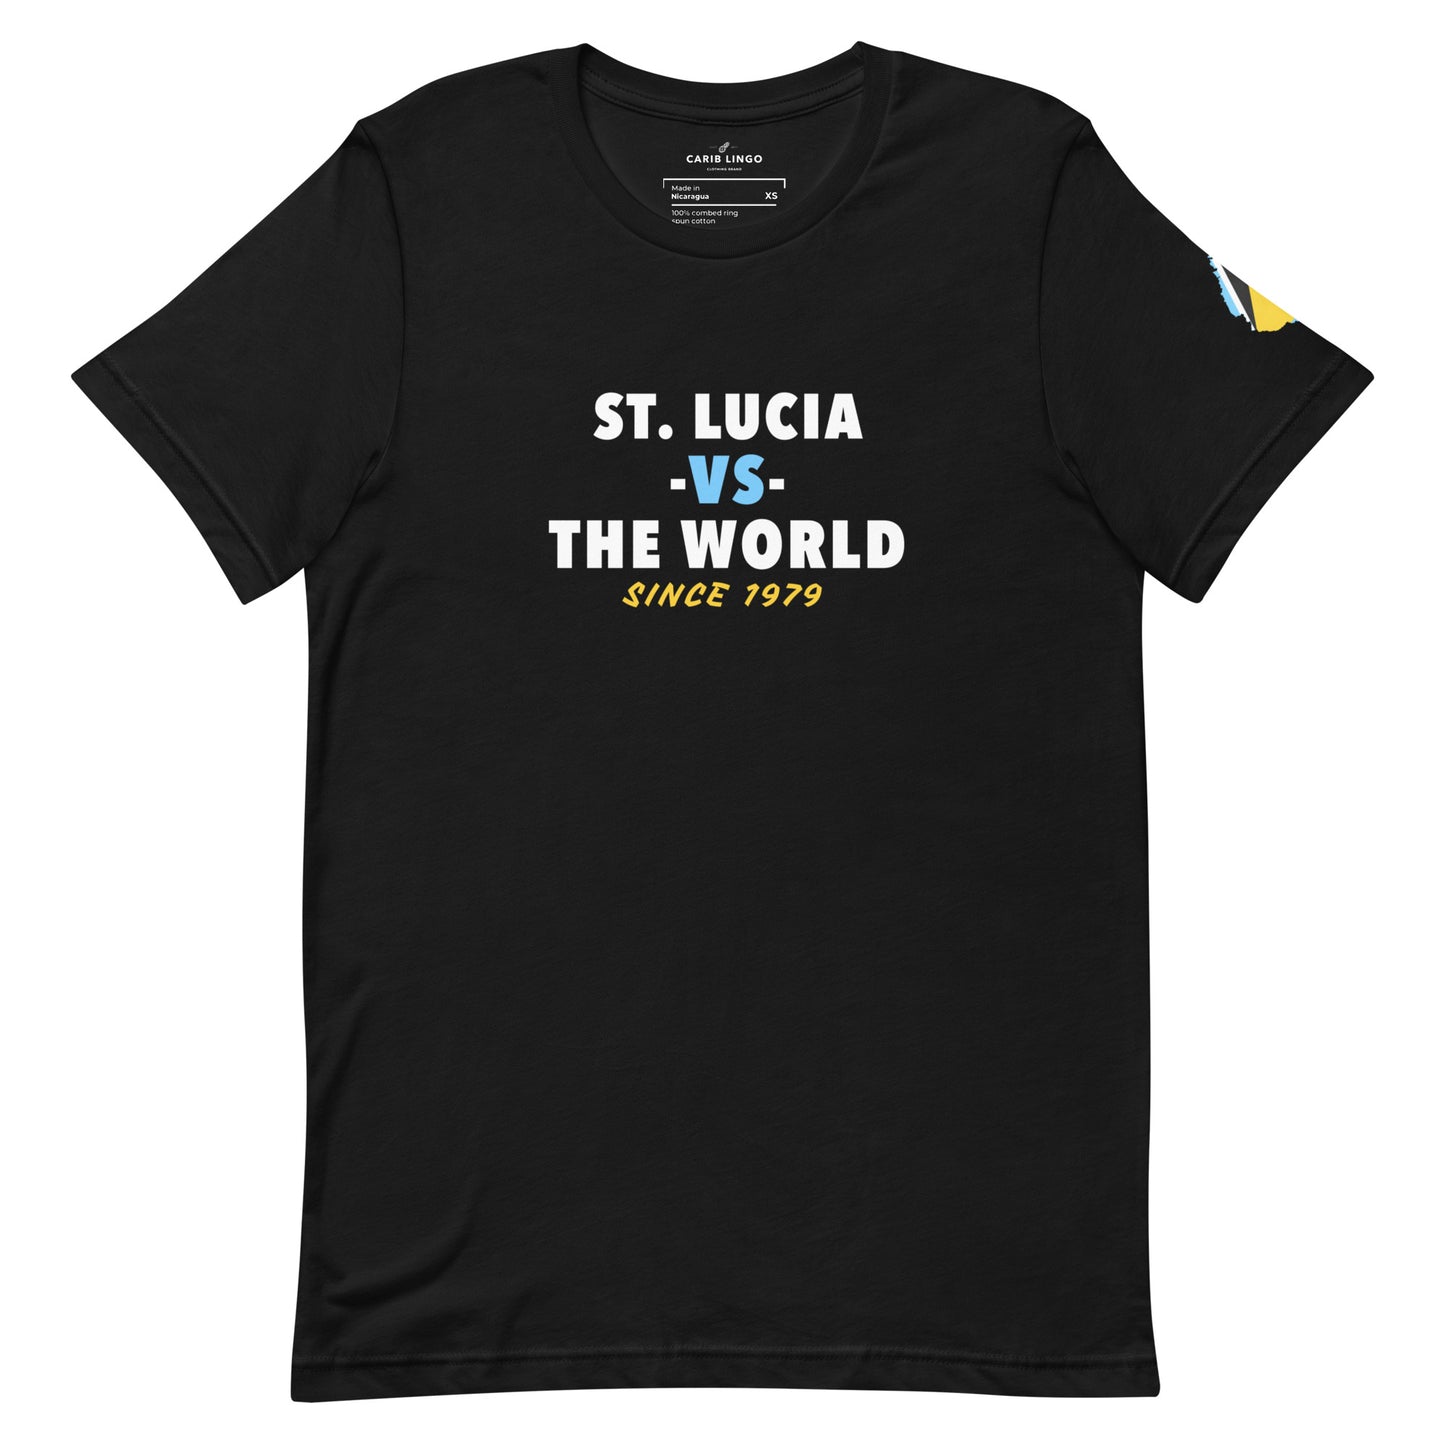 St. Lucia -vs- The World t-shirt